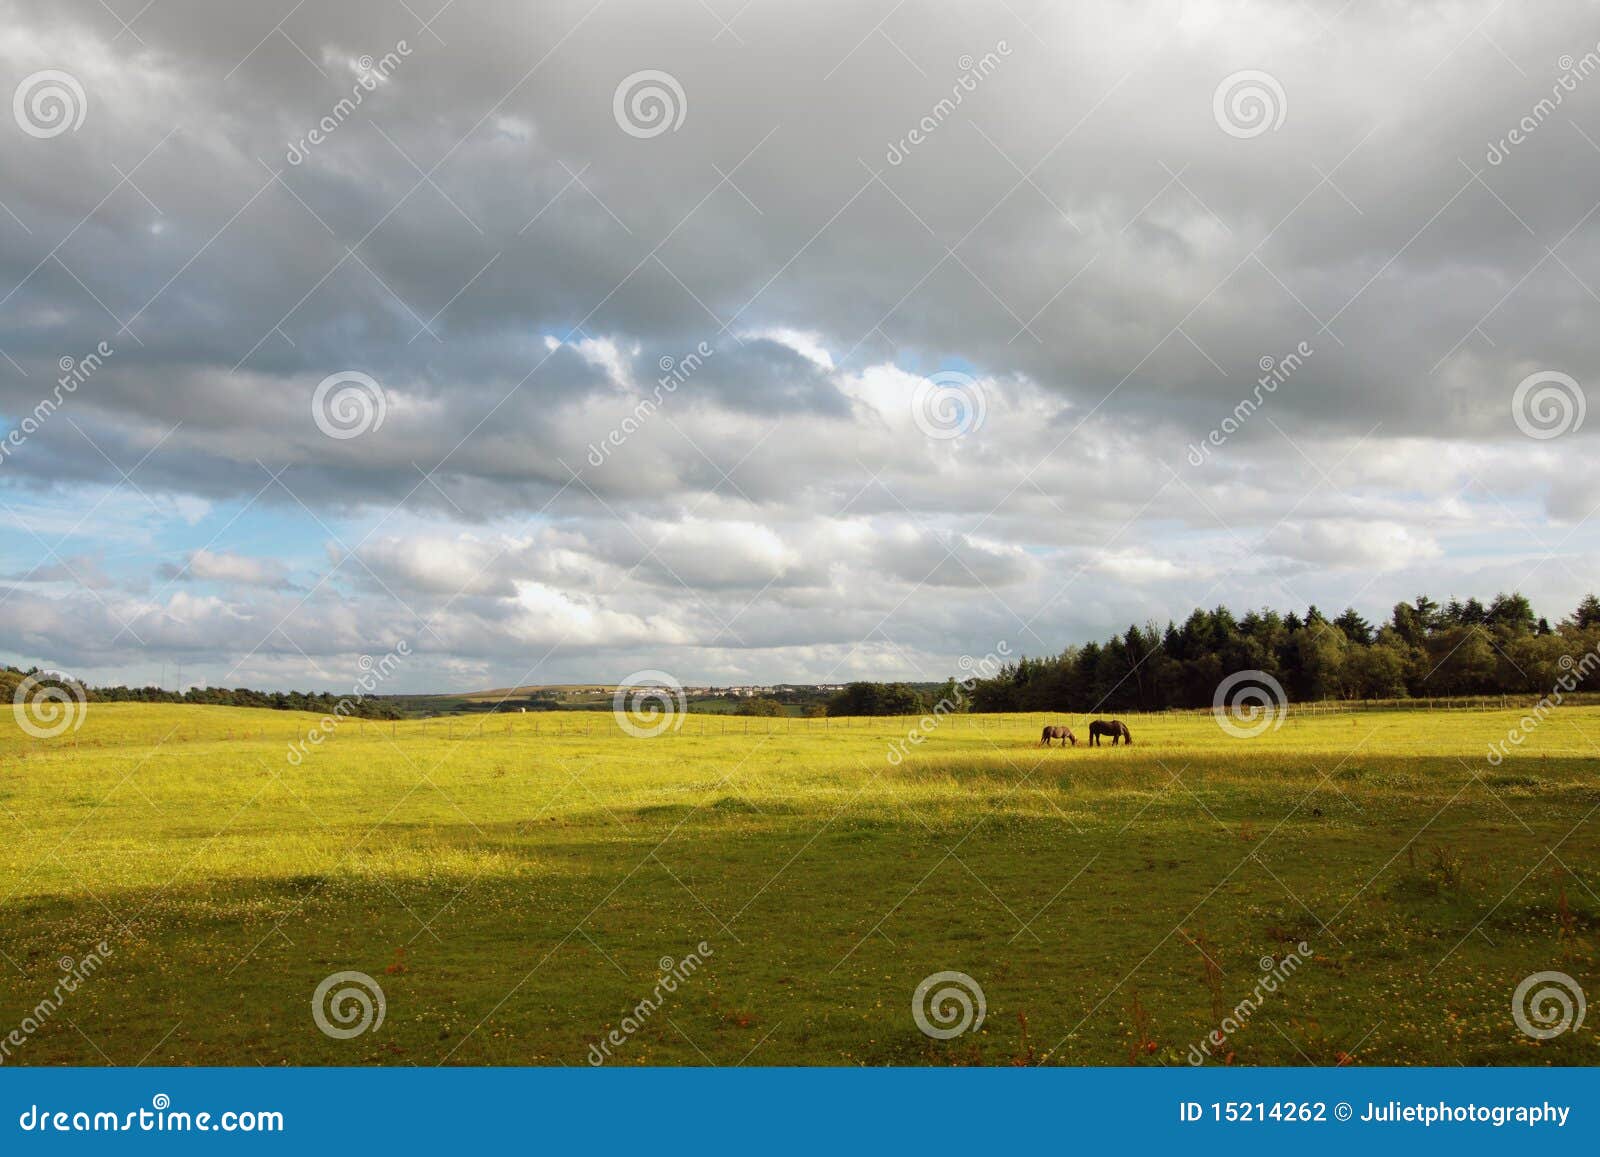 Scotland Landscape with Horses